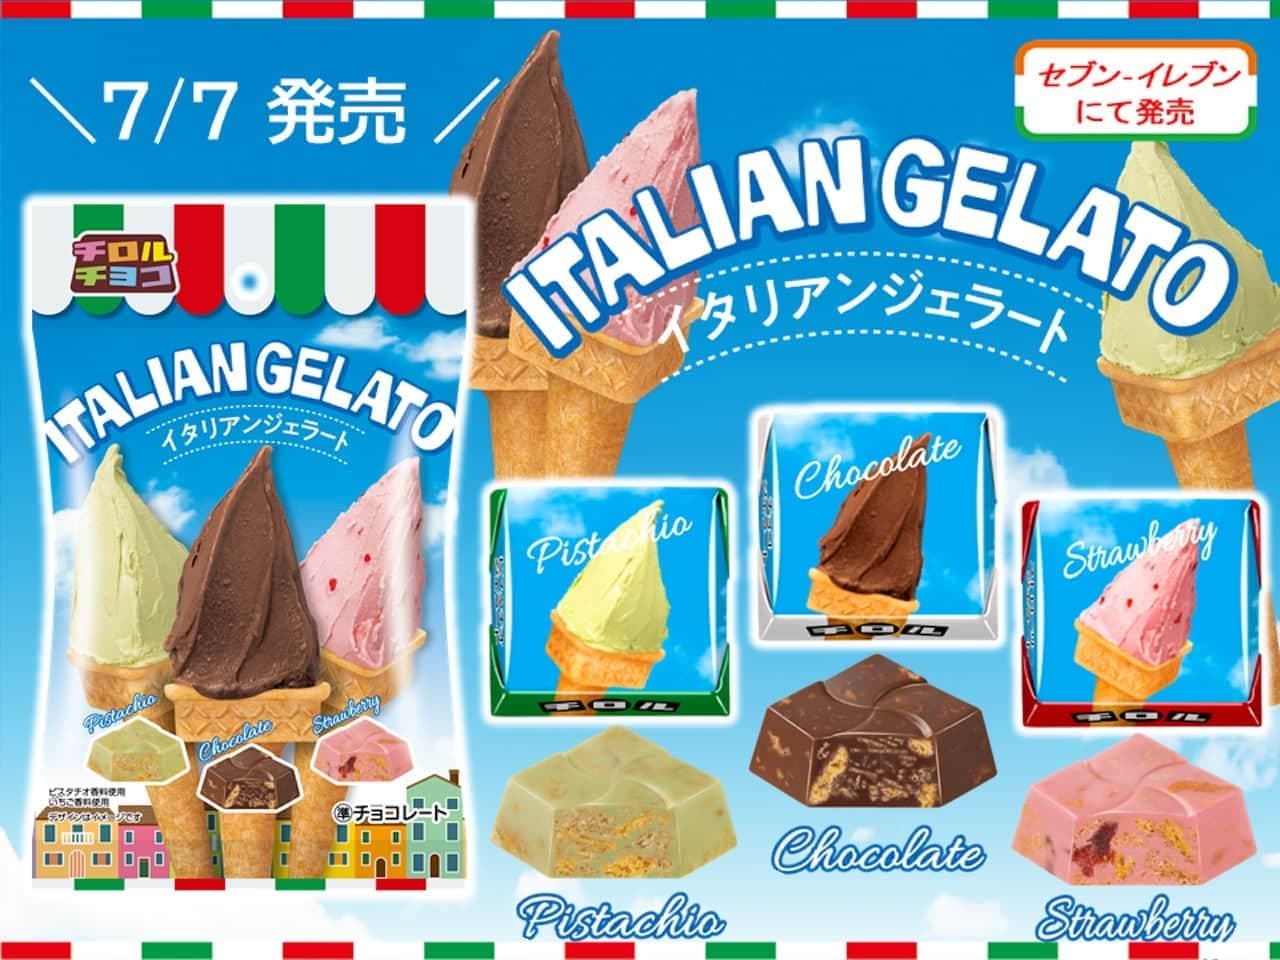 Tyrol Chocolate "Italian Gelato [Bag]".